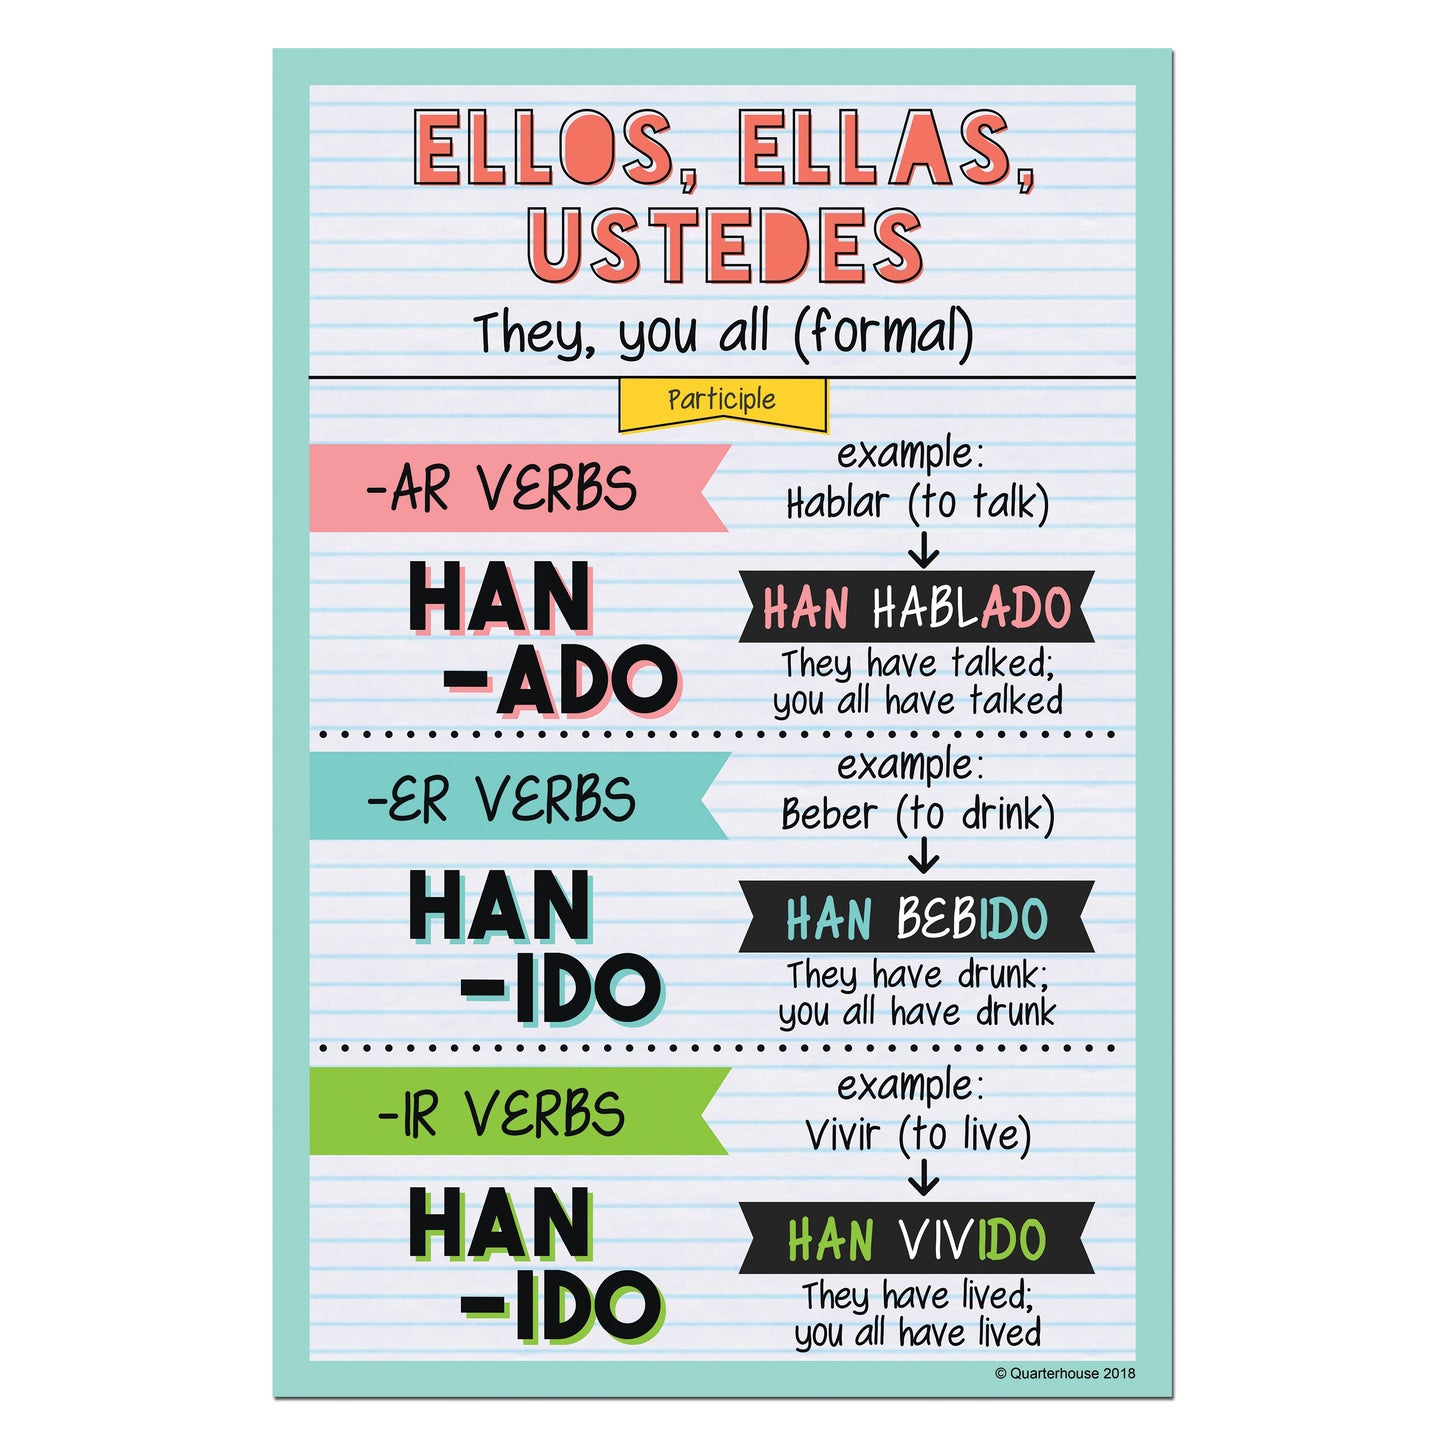 Quarterhouse Ellos, Ellas, Ustedes - Participle Spanish Verb Conjugation Poster, Spanish and ESL Classroom Materials for Teachers